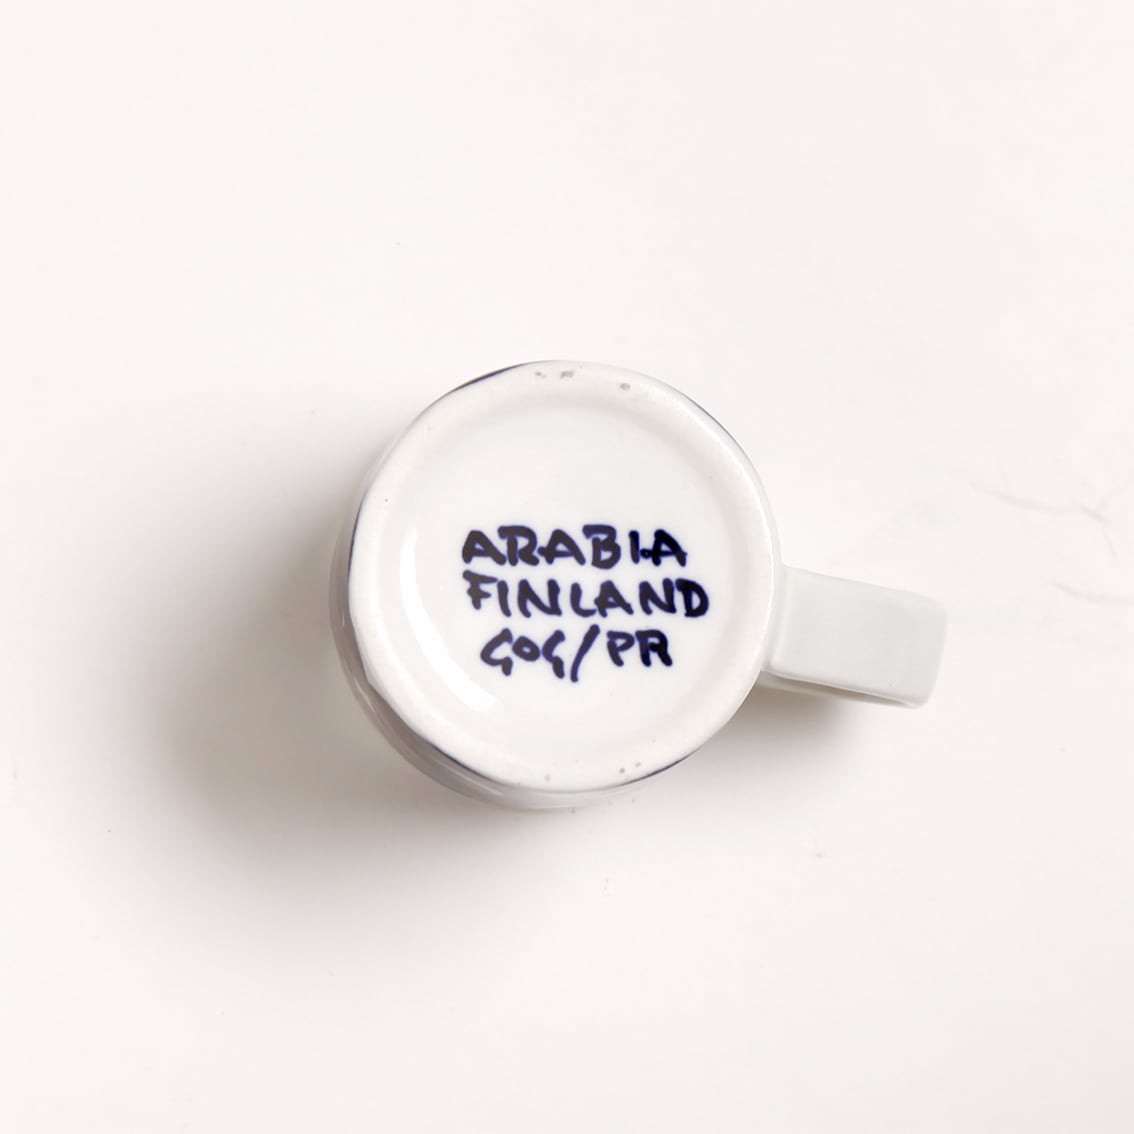 ARABIA アラビア Haarikka ハーリッカ デミタスコーヒーカップ 北欧ヴィンテージ